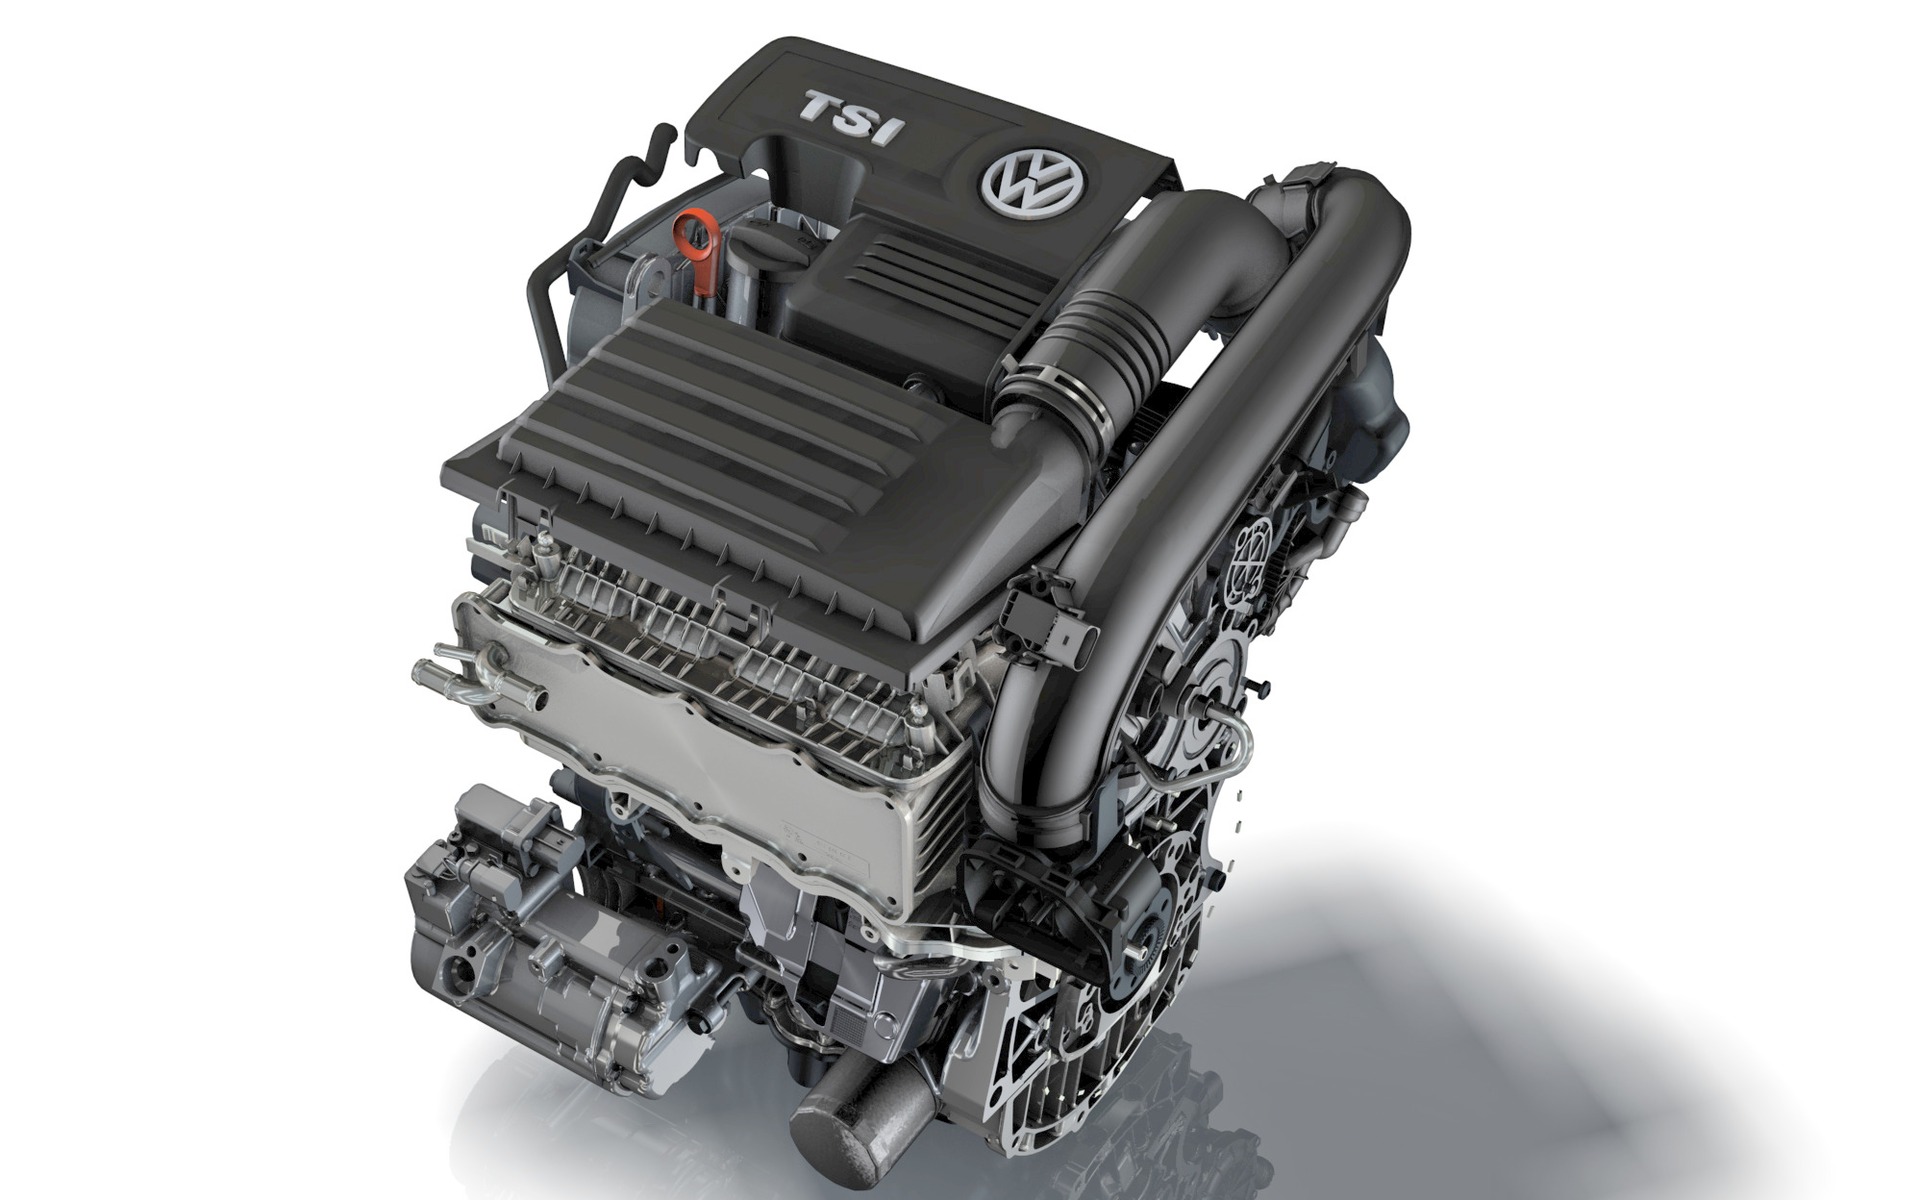 Volkswagen turbocharged 1.4L four-cylinder engine